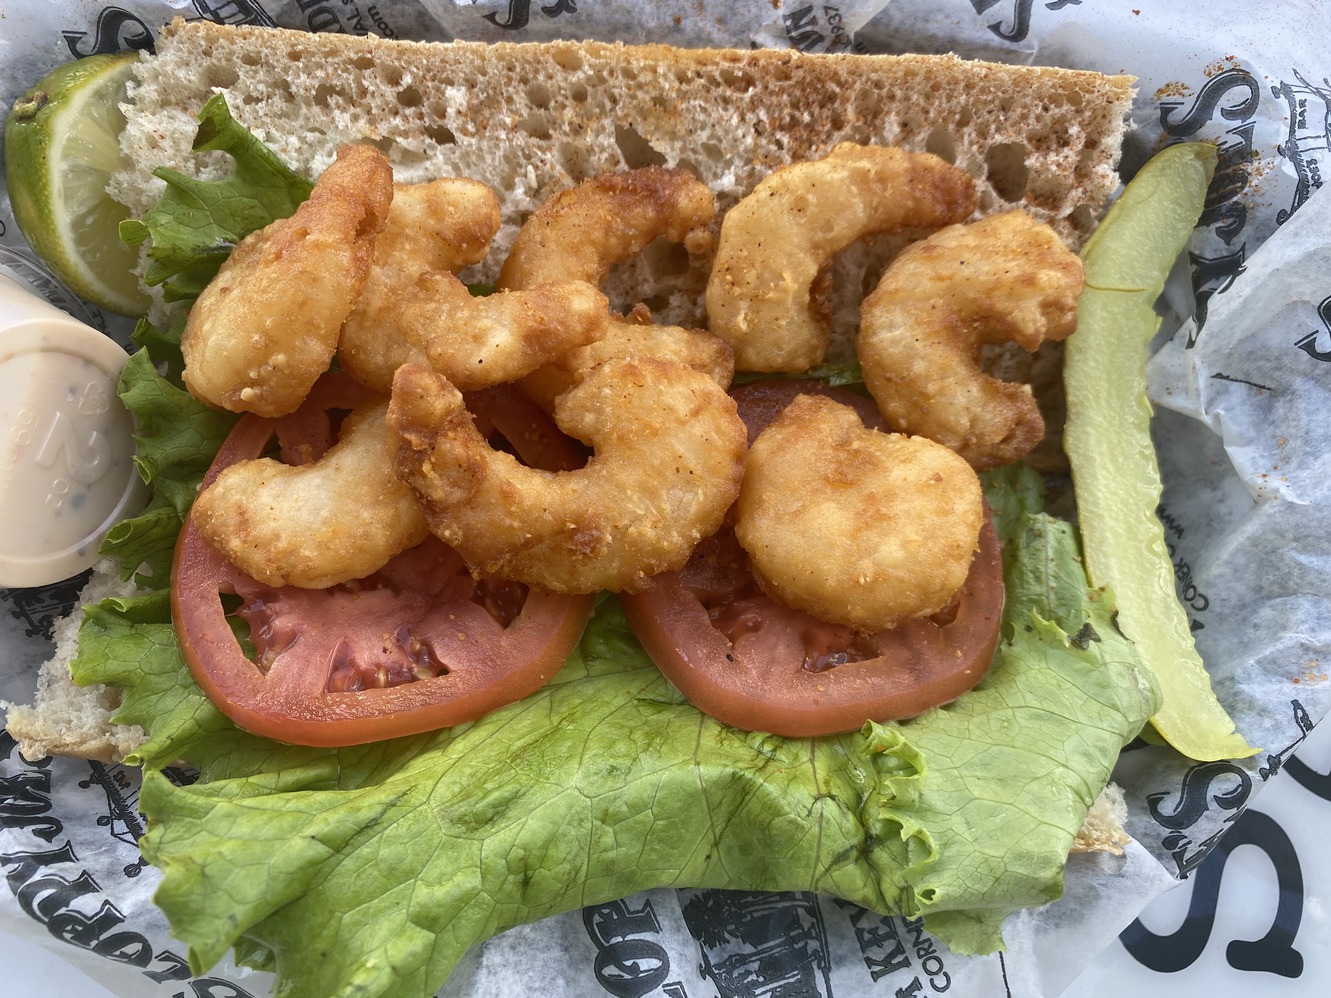 The shrimp po-boy sandwich.